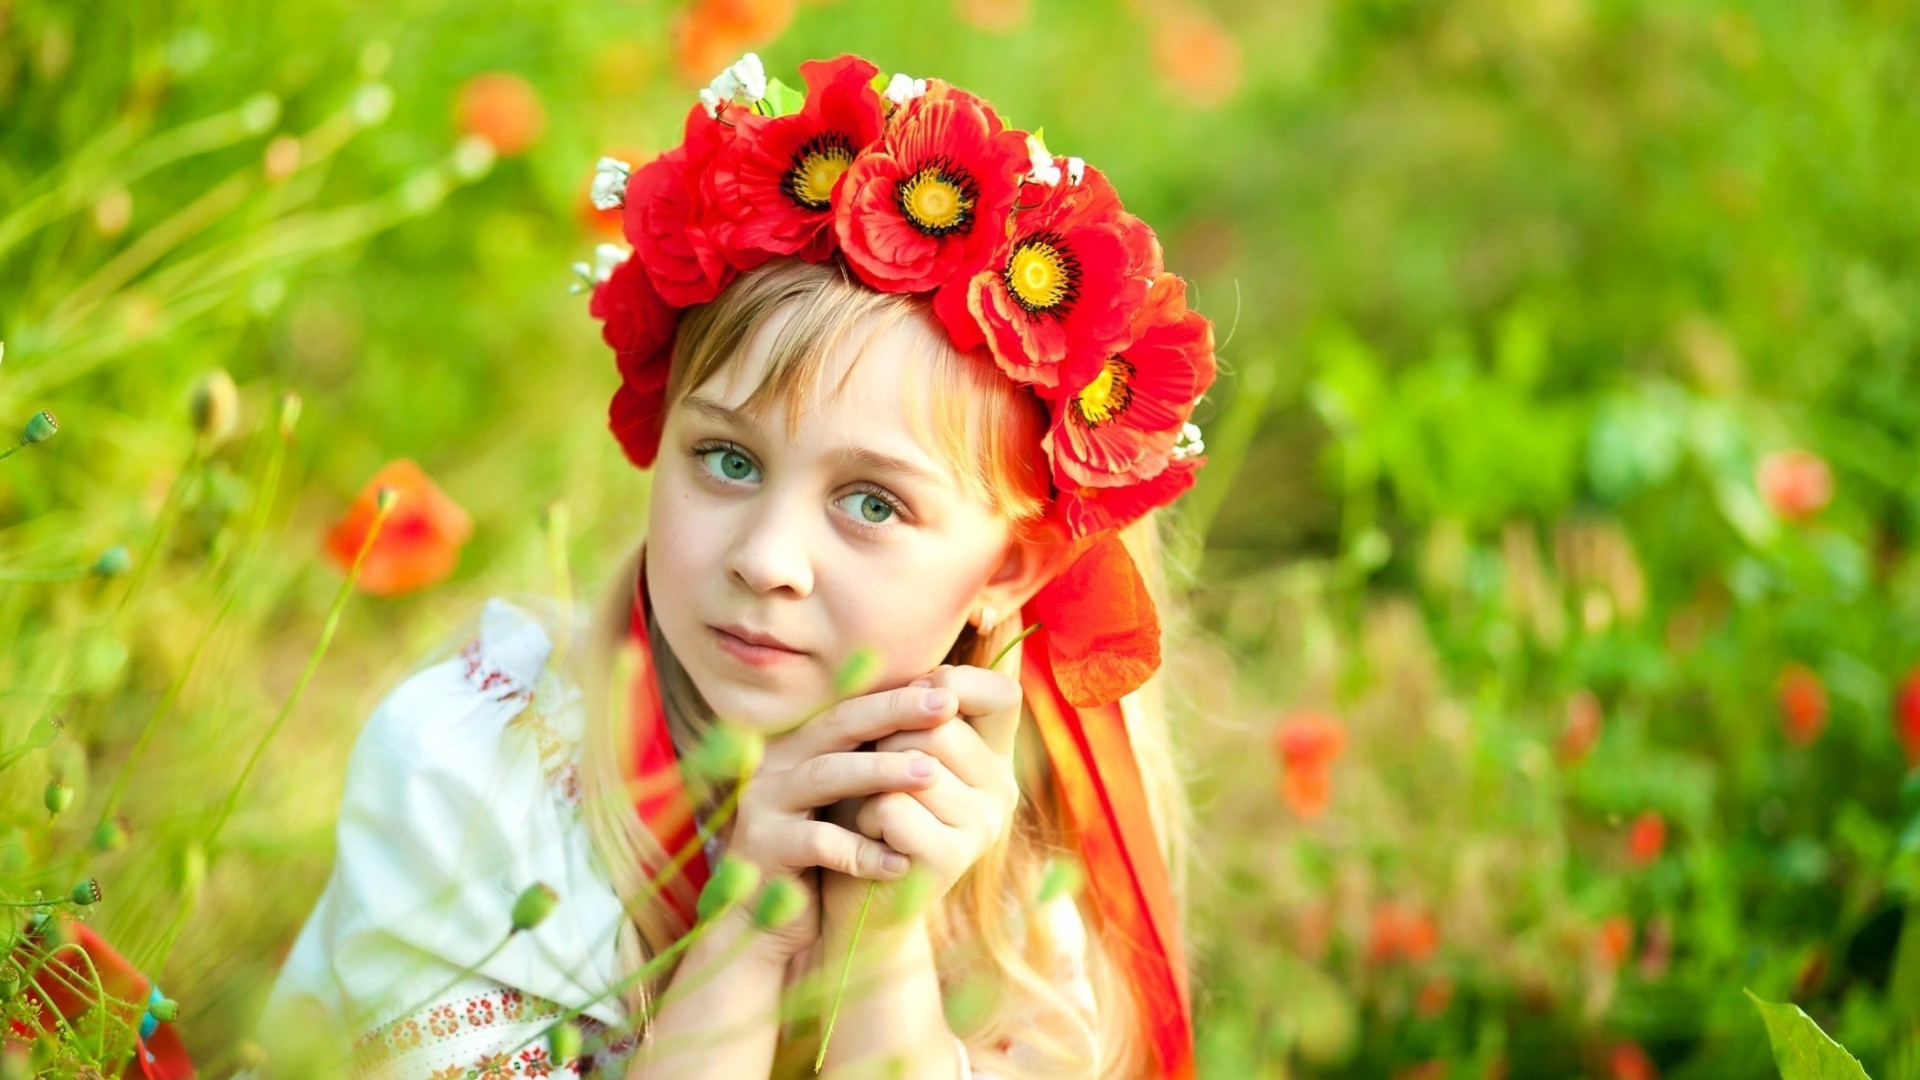 children flowers wreaths green eyes red flowers blonde bangs Wallpaper